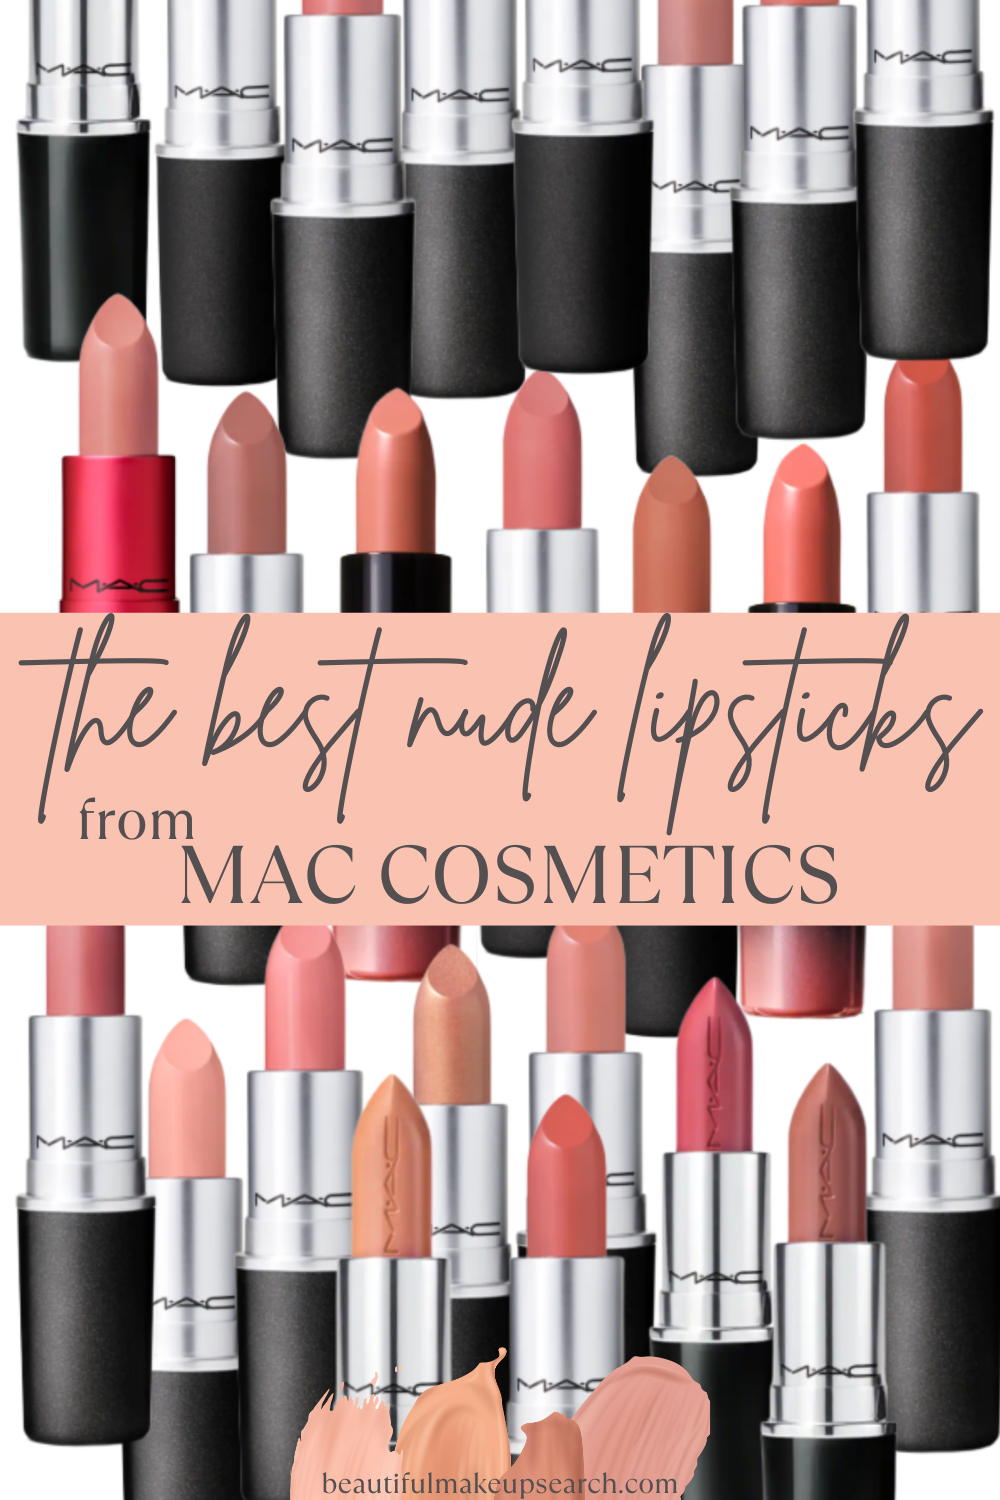 Love MAC's Best-Selling Velvet Teddy Lipstick? You Need to Try Teddy 2.0